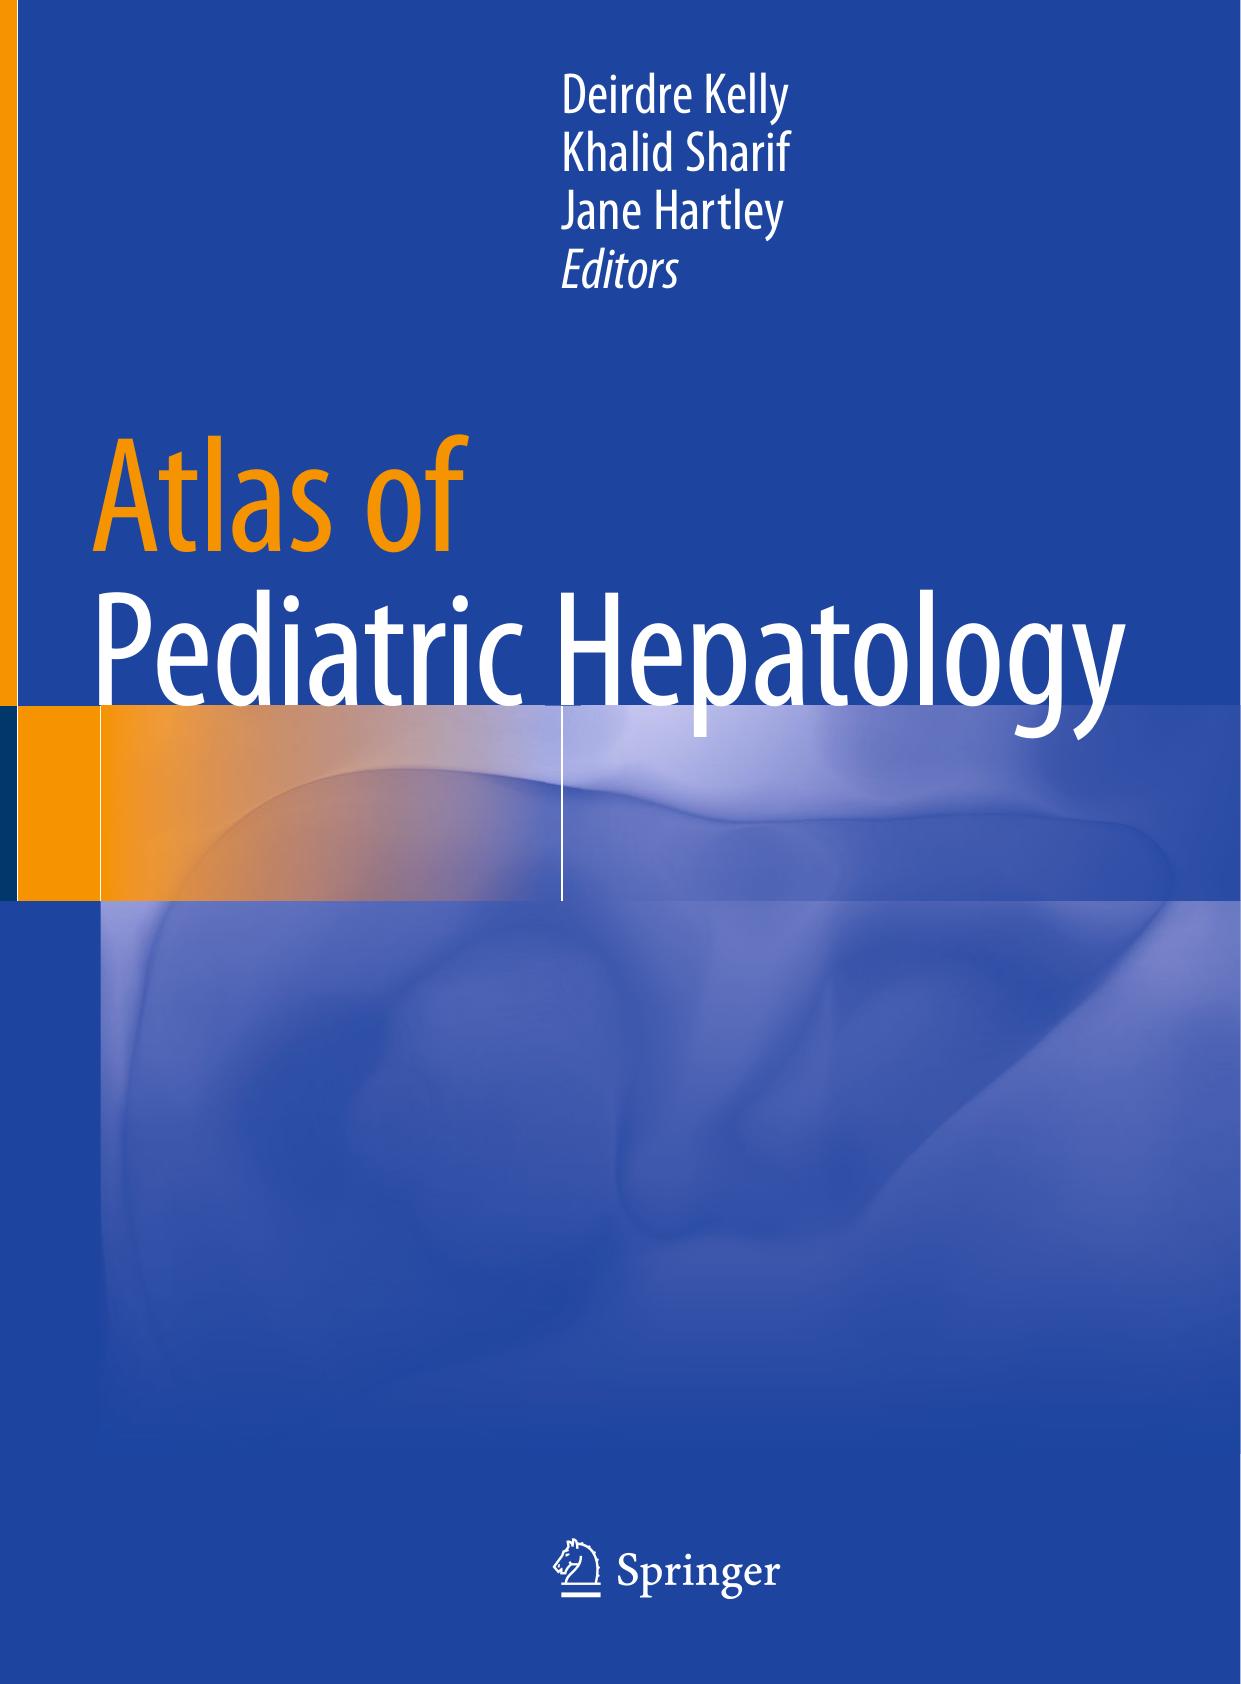 Atlas of Pediatric Hepatology 2018